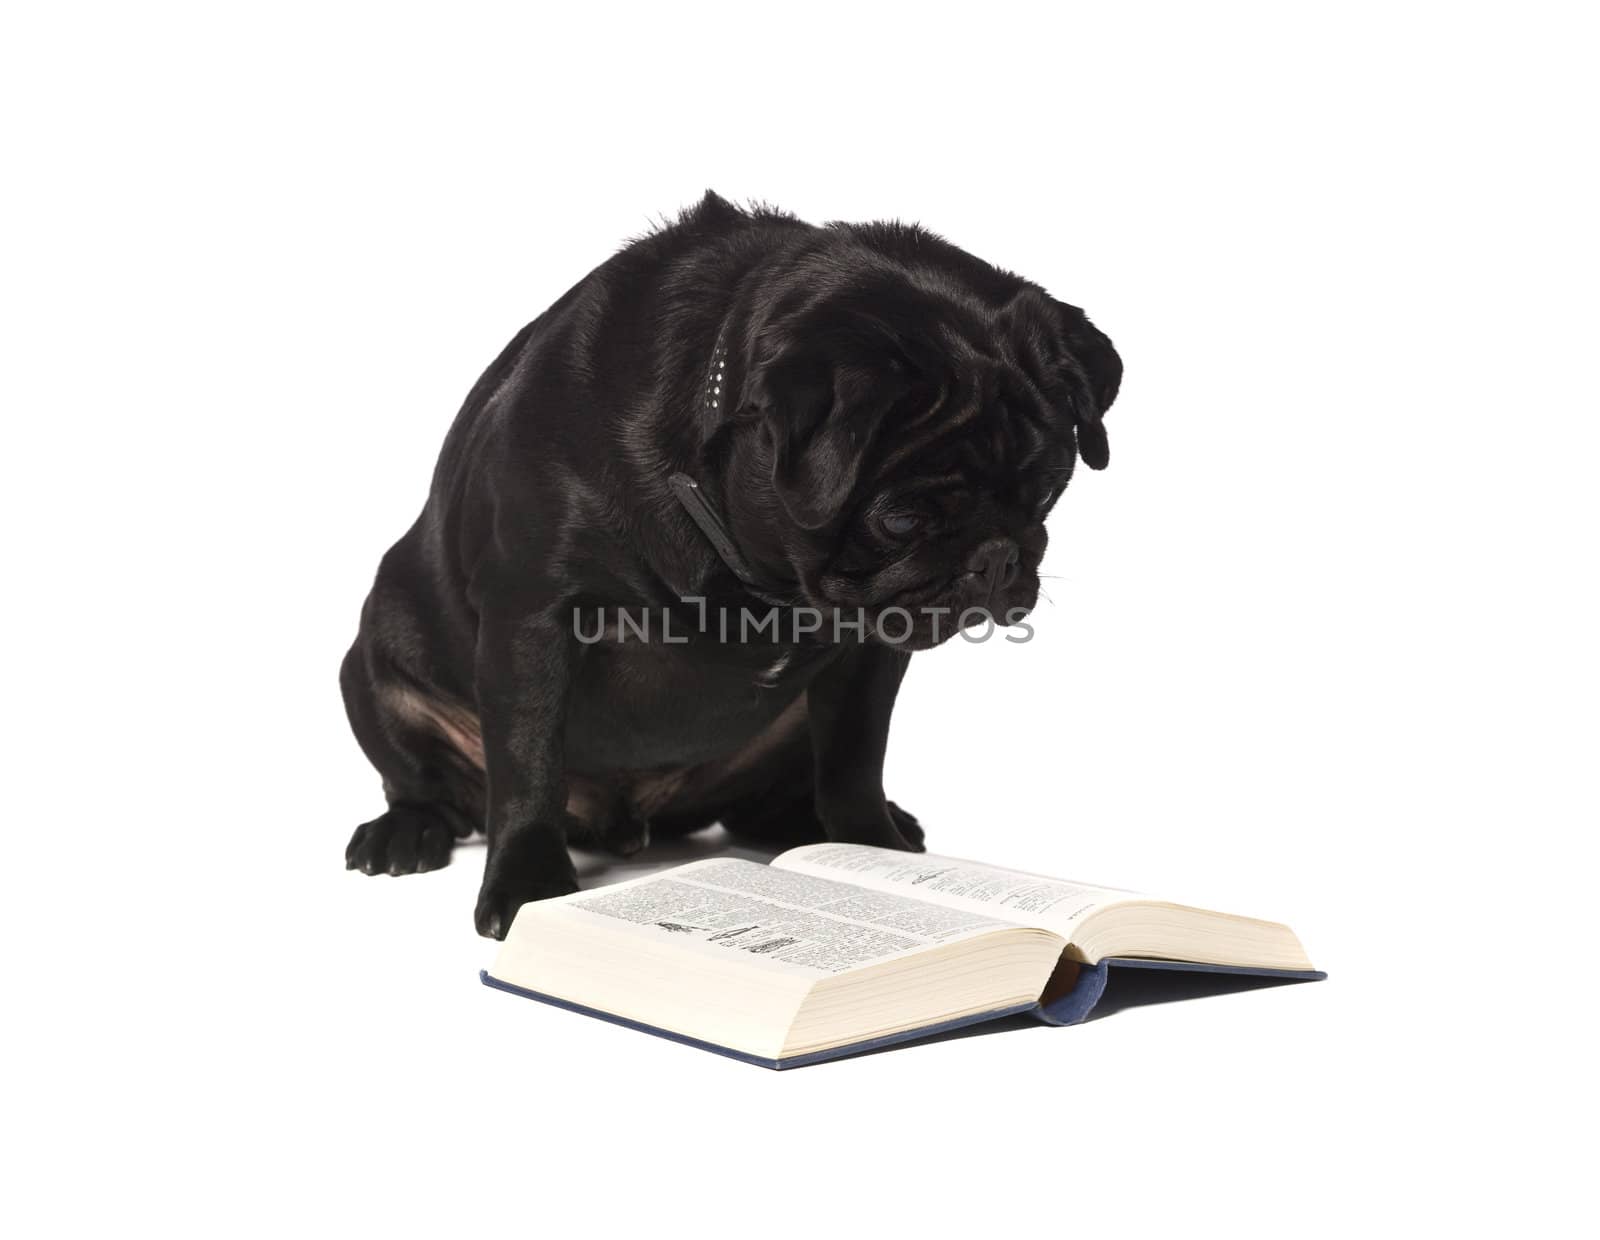 Dog reading a book by gemenacom